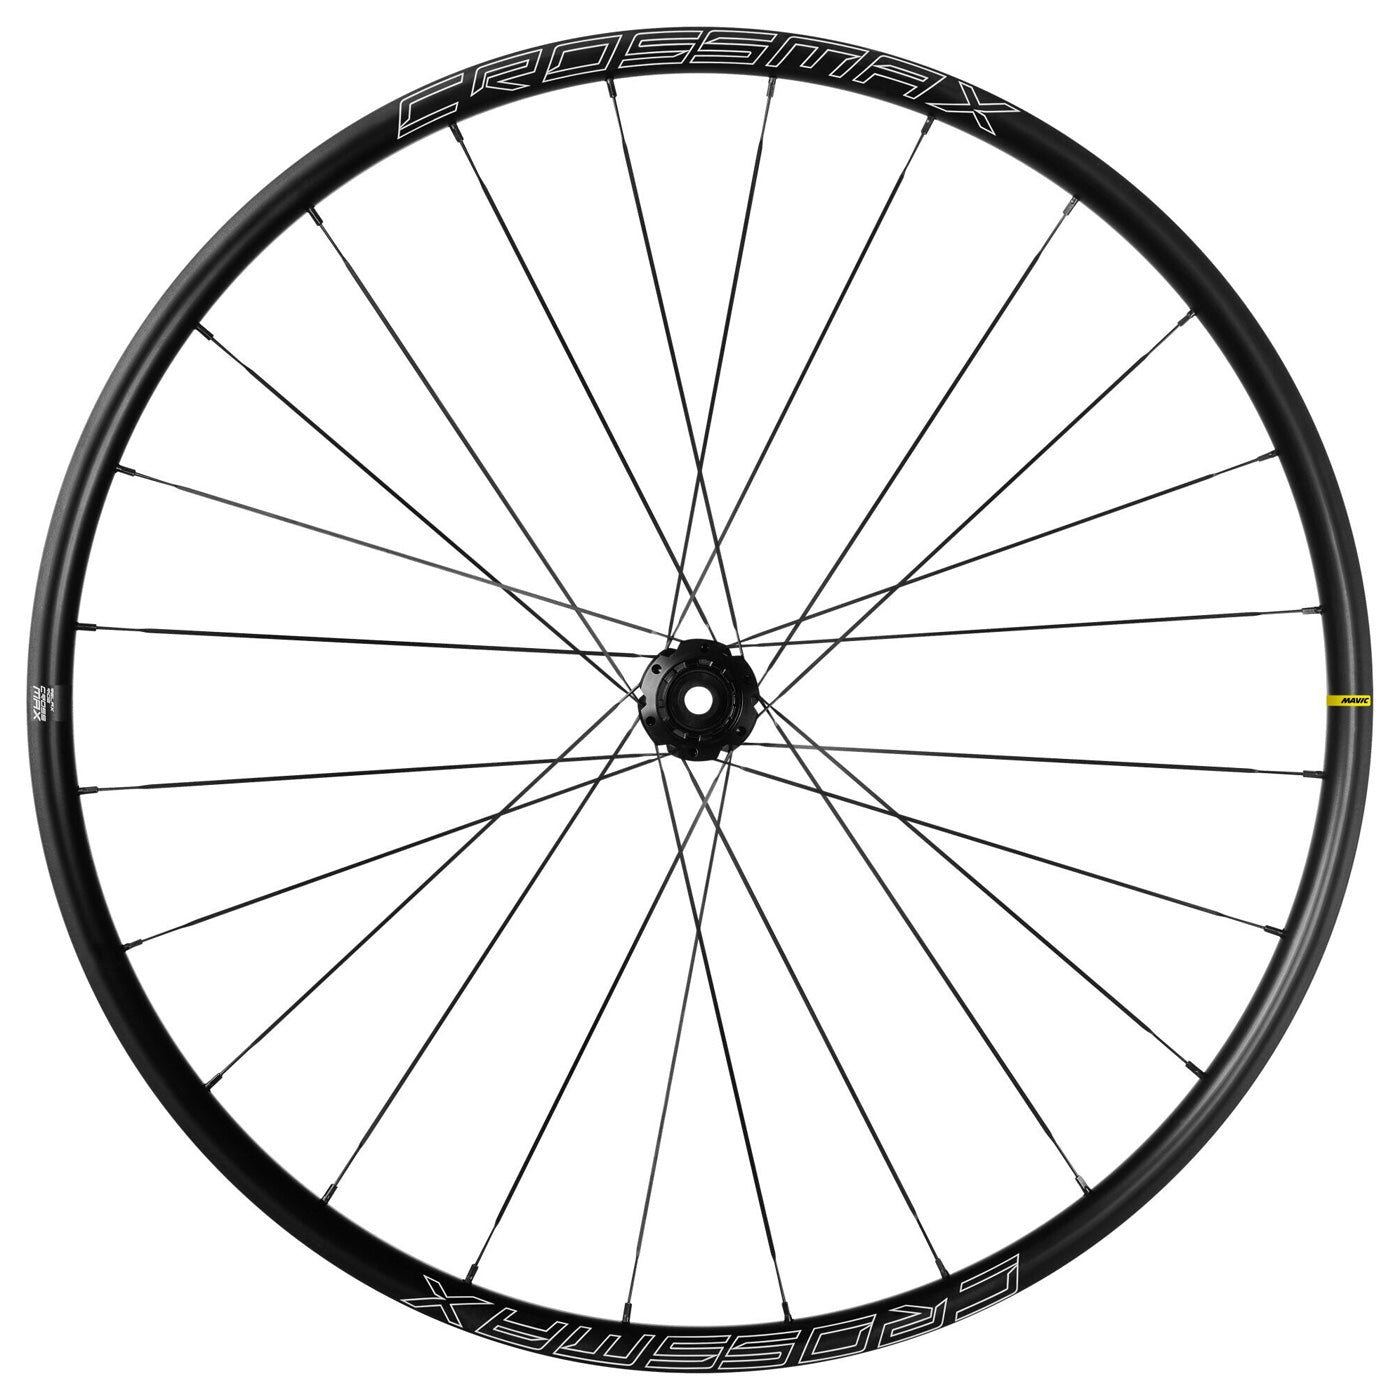 Mavic Crossmax Int 29 Boost Wheels - Black | All4cycling